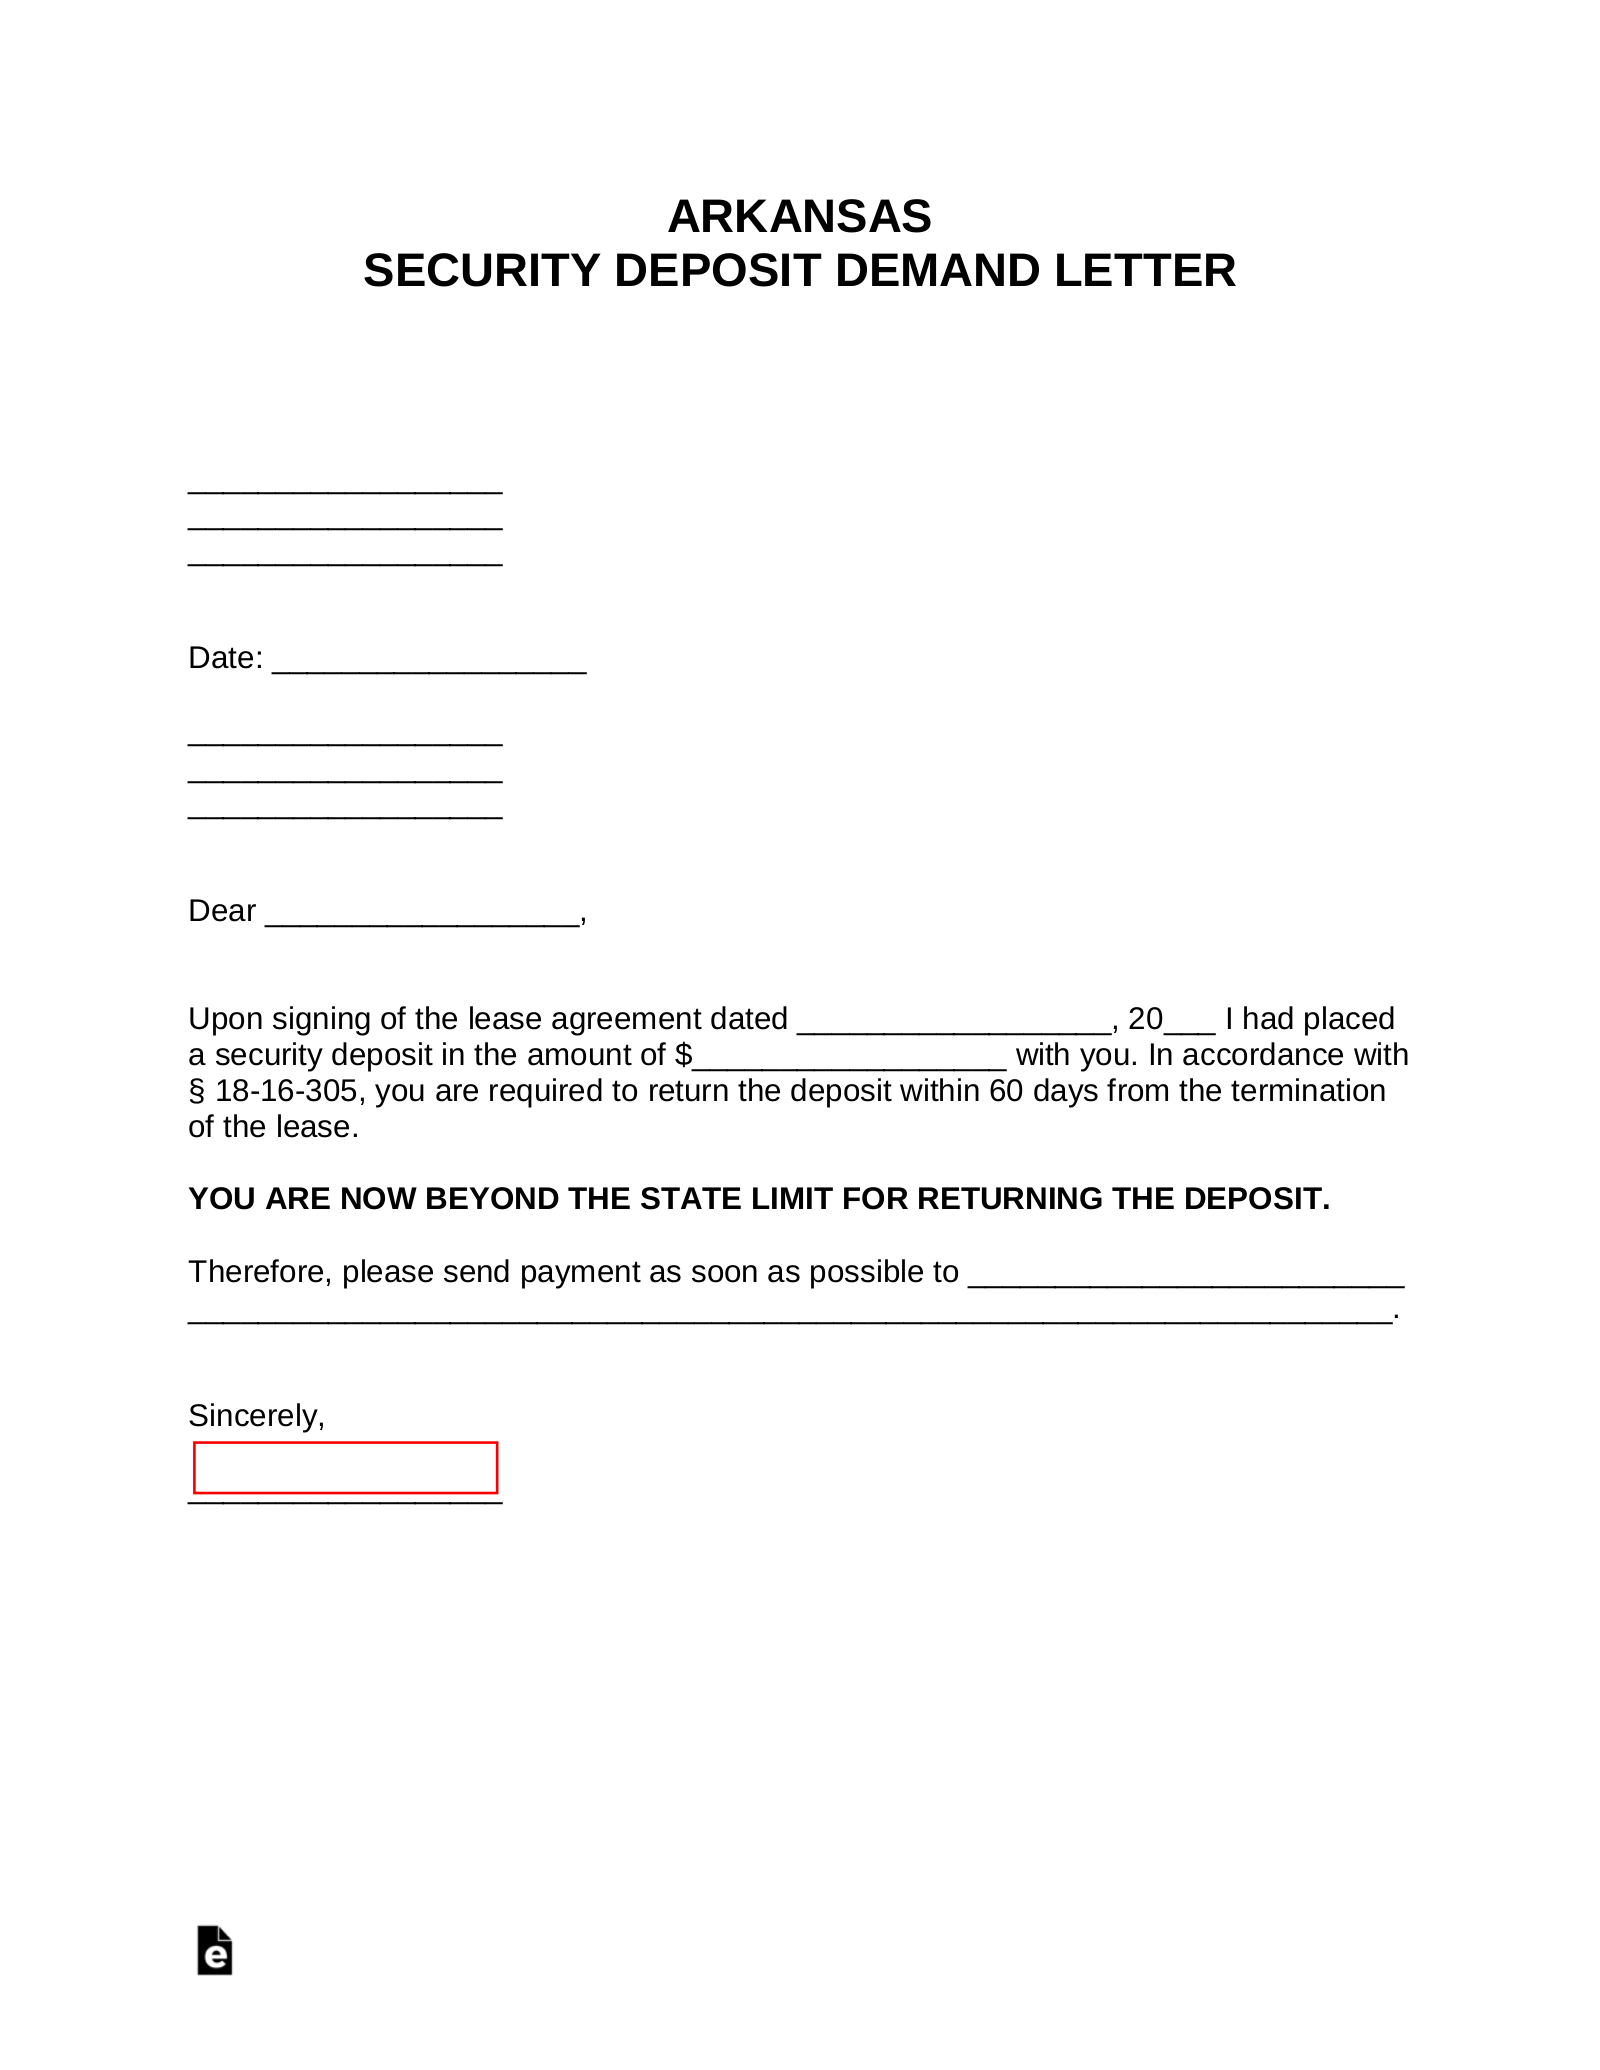 Arkansas Security Deposit Demand Letter